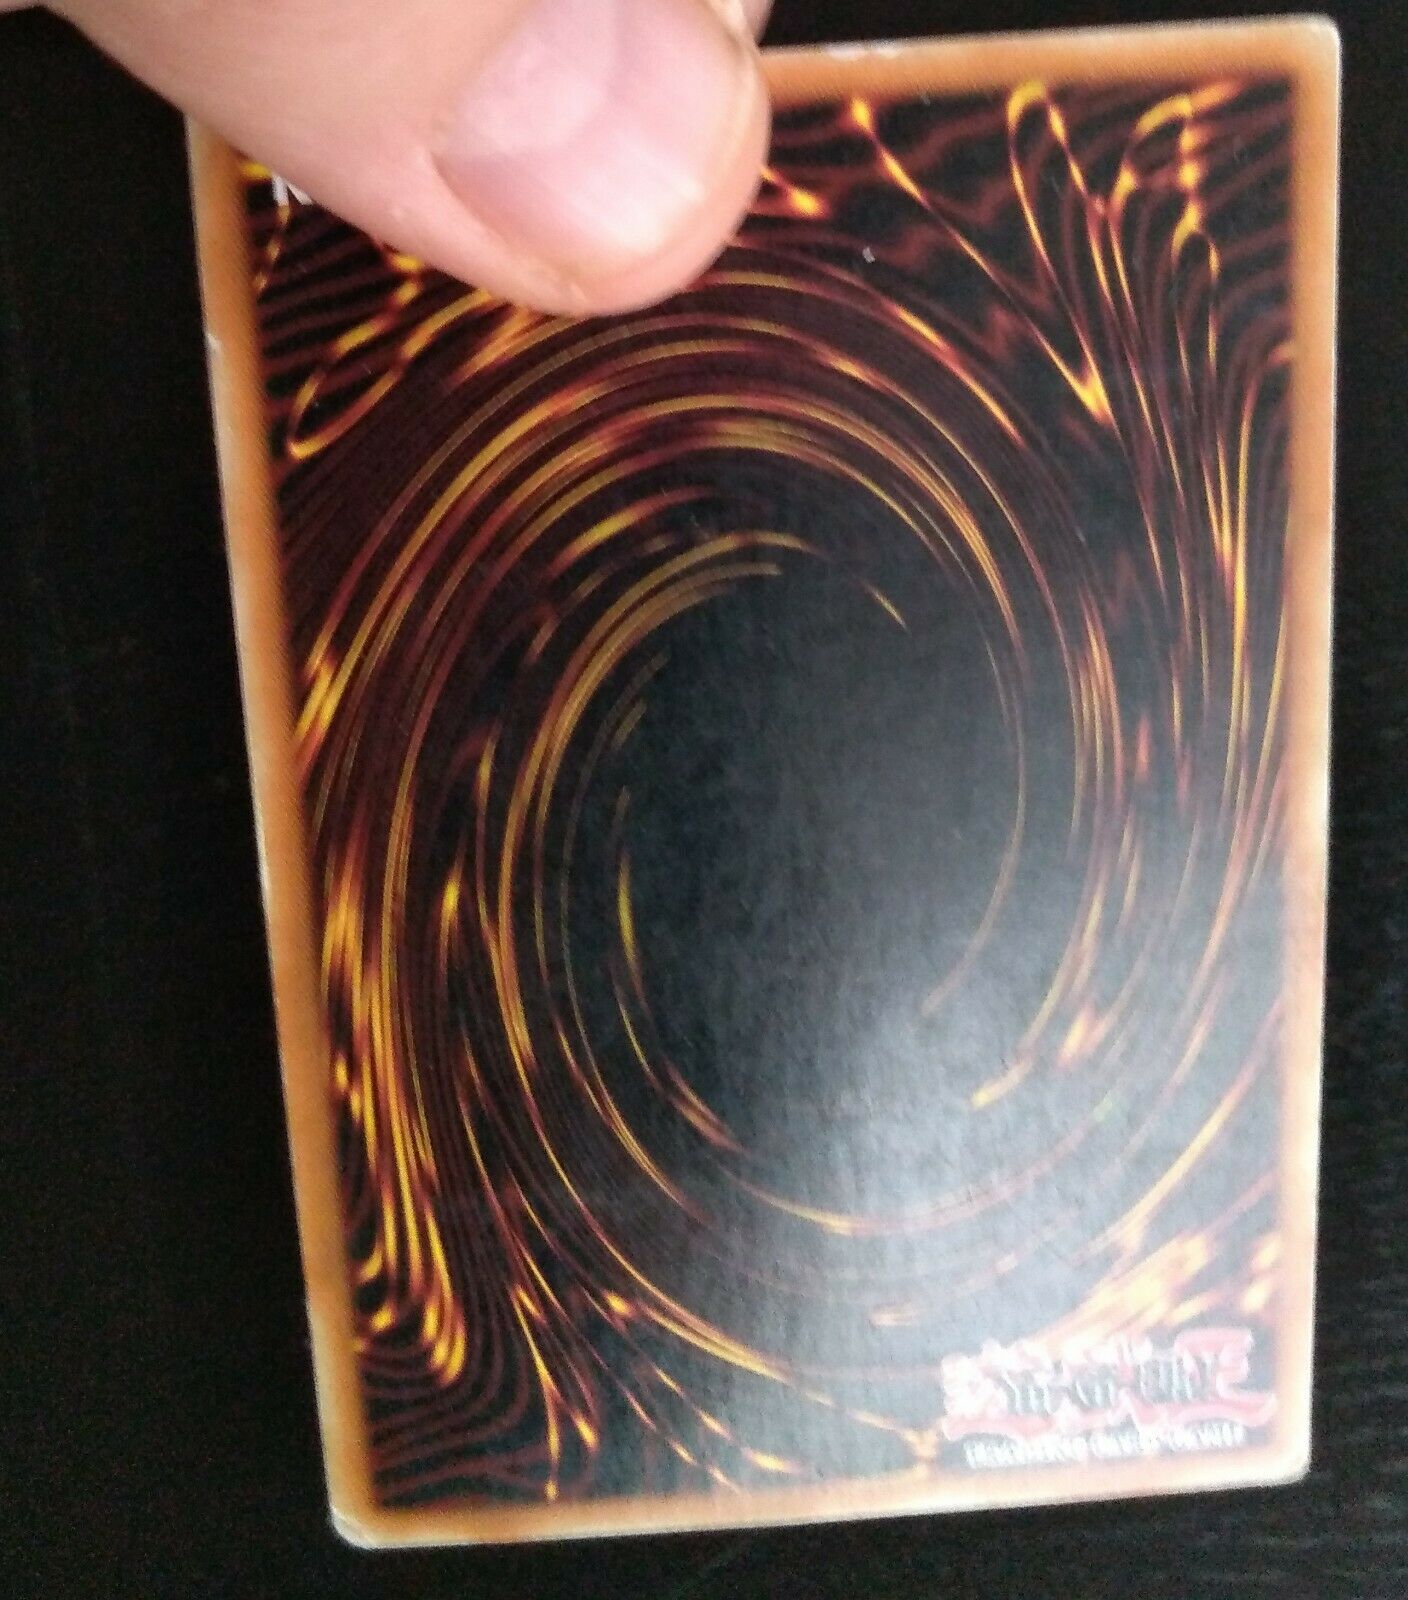 YUGIOH CARD, Horus the Black Flame Dragon LV8 Ultimate Rare